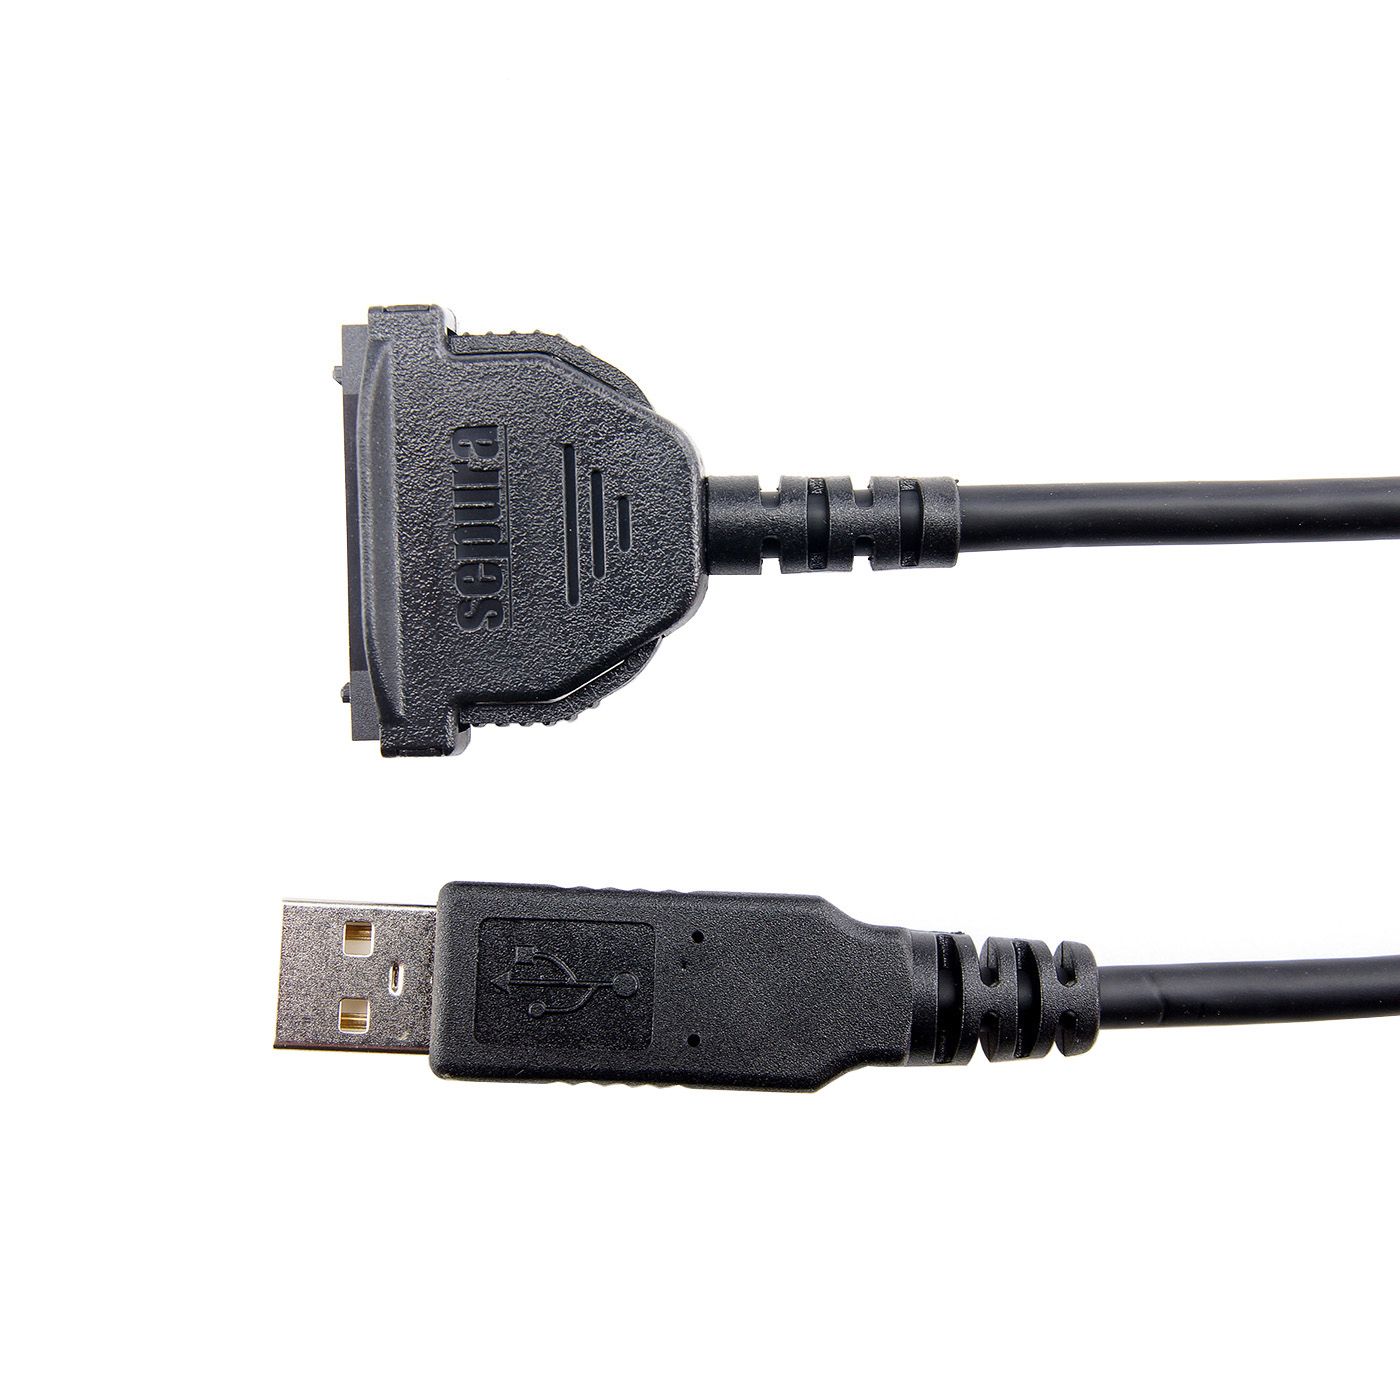 USB Programmier-/Datenkabel V2, für STP8/9000, Länge ca. 1,8m